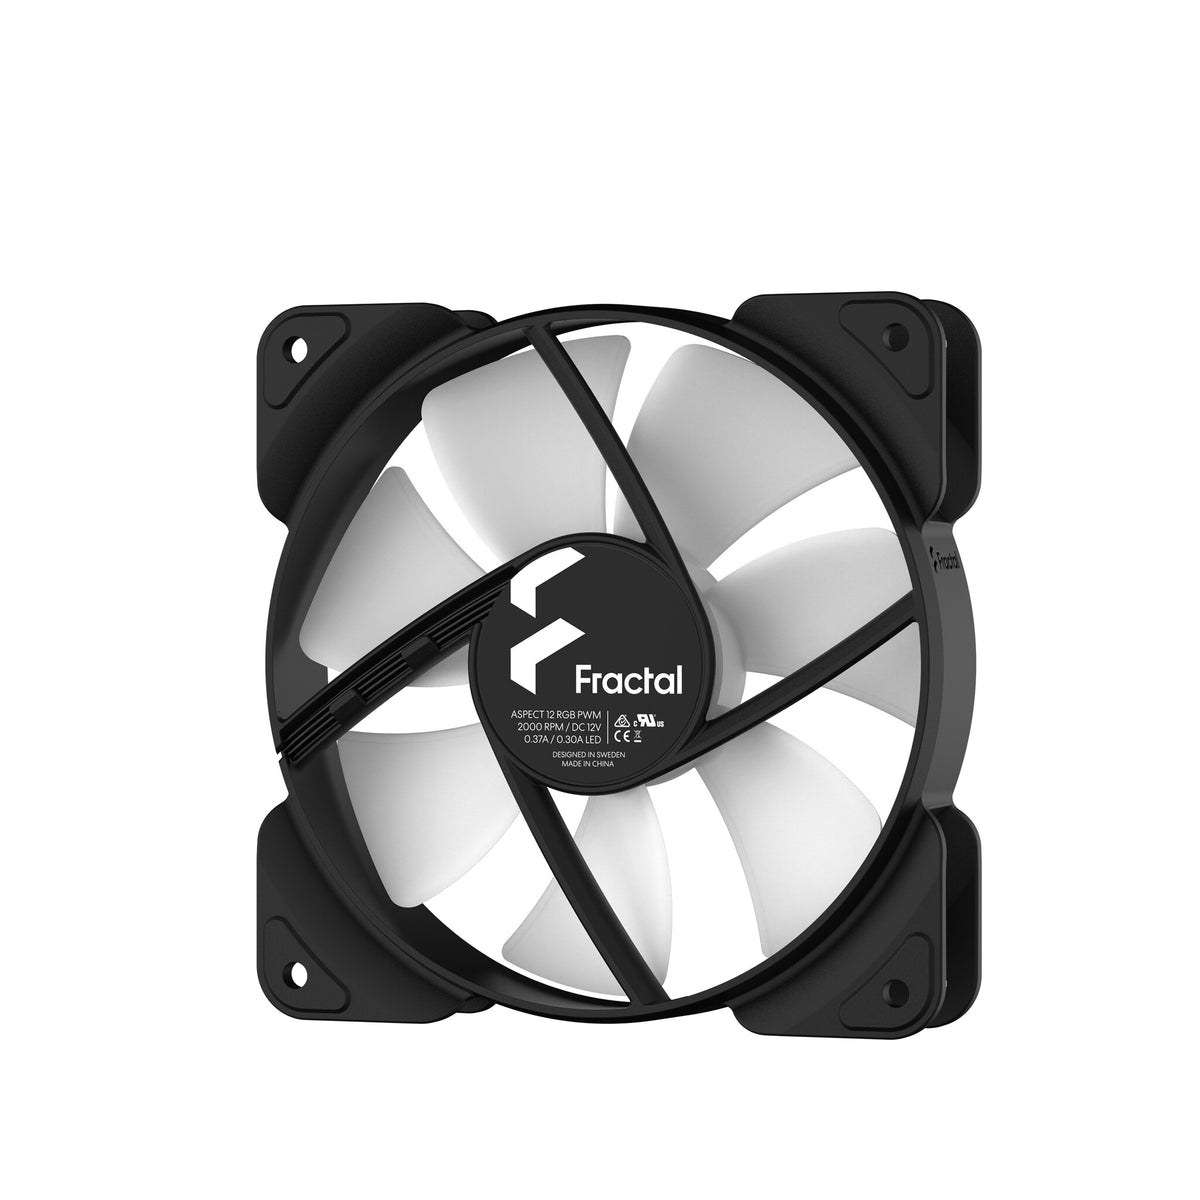 Fractal Design Aspect 12 RGB PWM - Computer Case Fan - 120mm